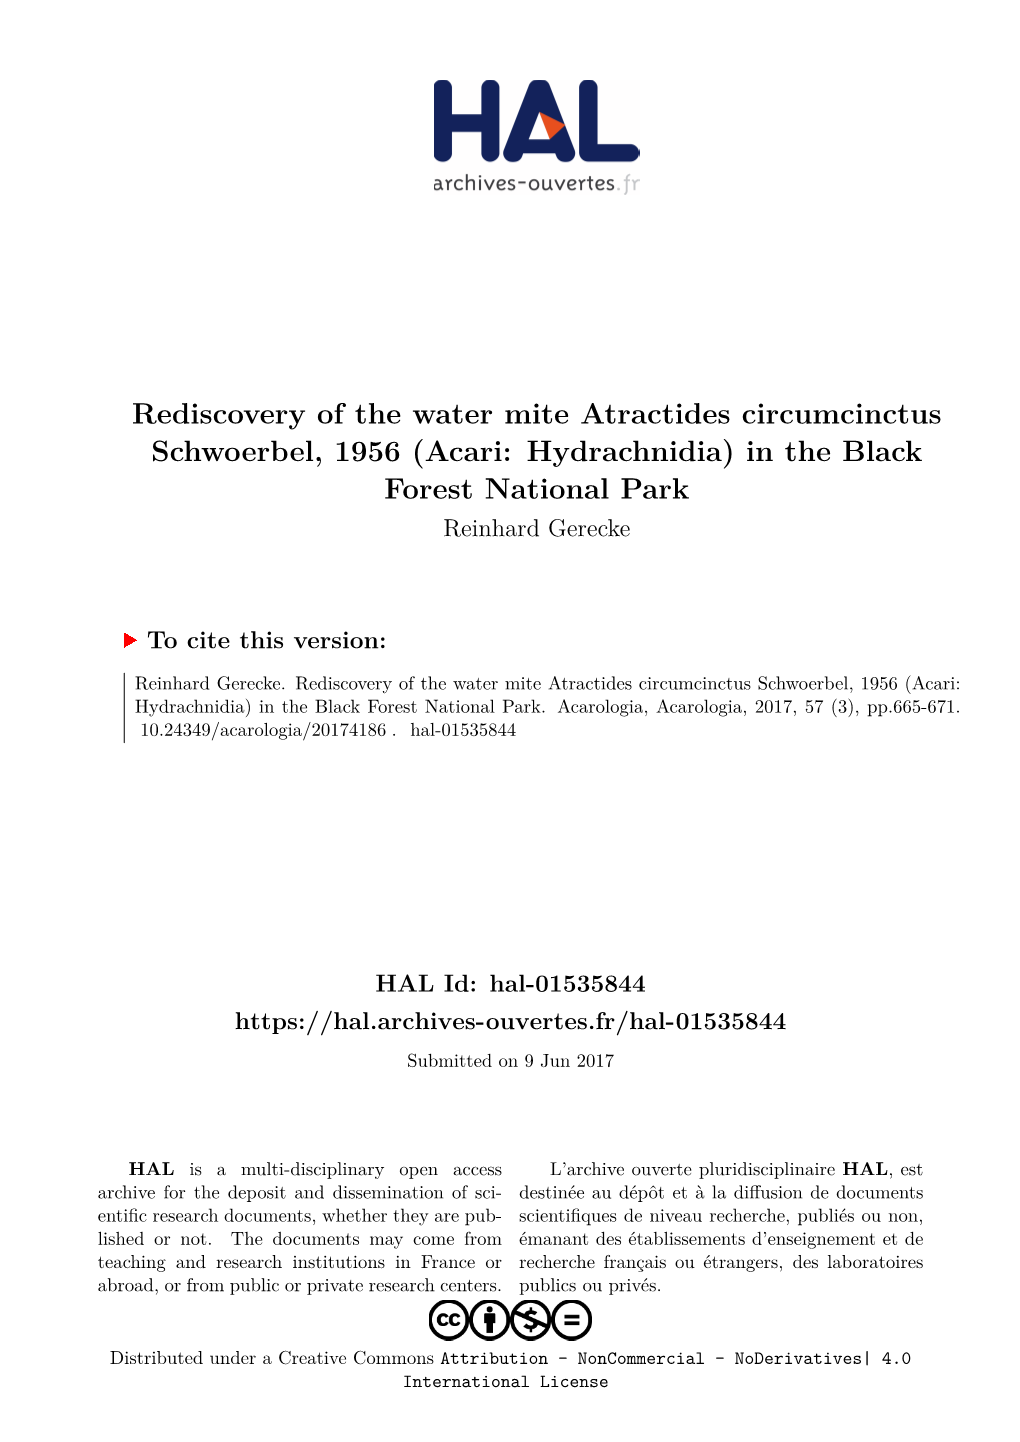 Rediscovery of the Water Mite Atractides Circumcinctus Schwoerbel, 1956 (Acari: Hydrachnidia) in the Black Forest National Park Reinhard Gerecke